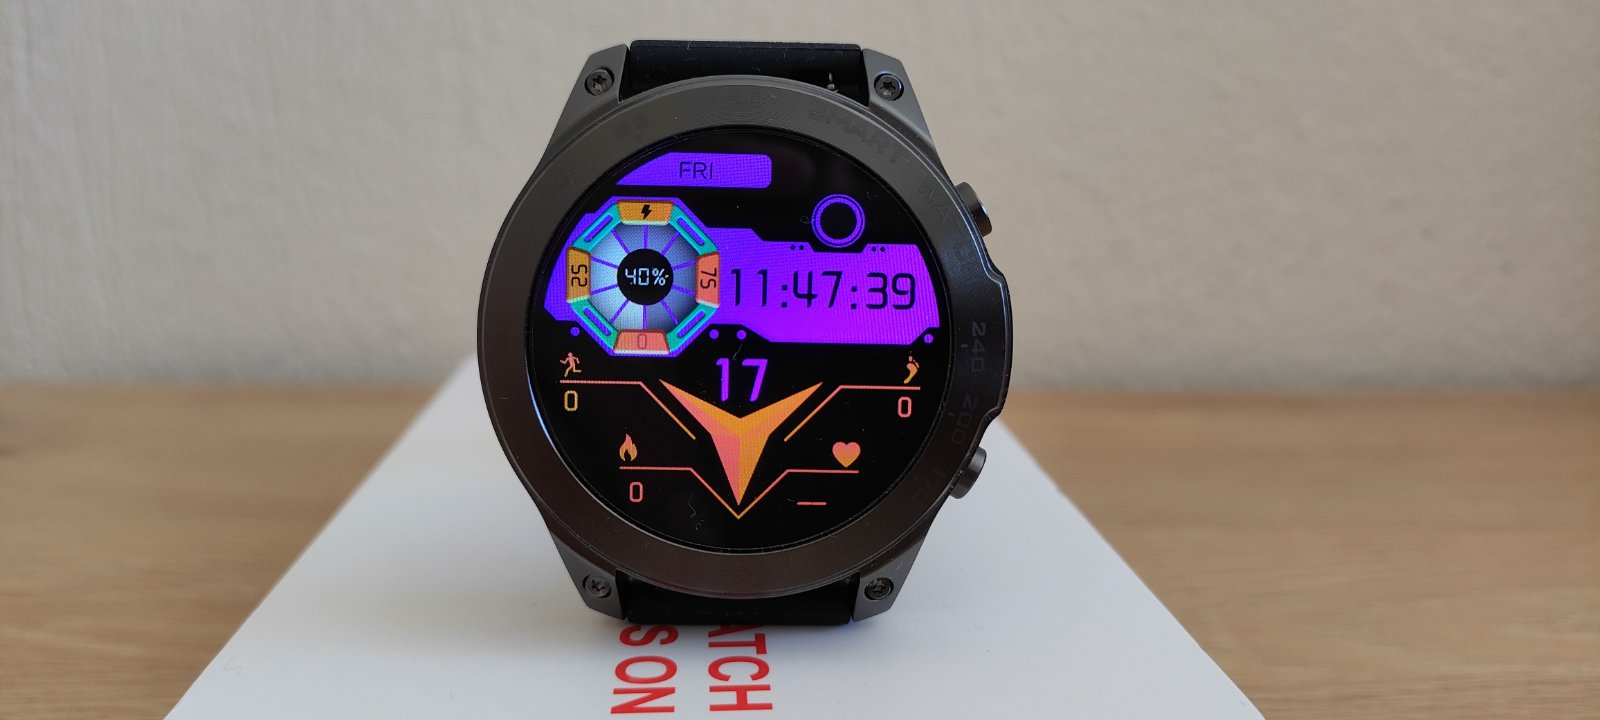 Smartwatch καινούργιo με Amoled οθόνη 1,43 ίντσες 466×466 (βίντεο στην περιγραφή)